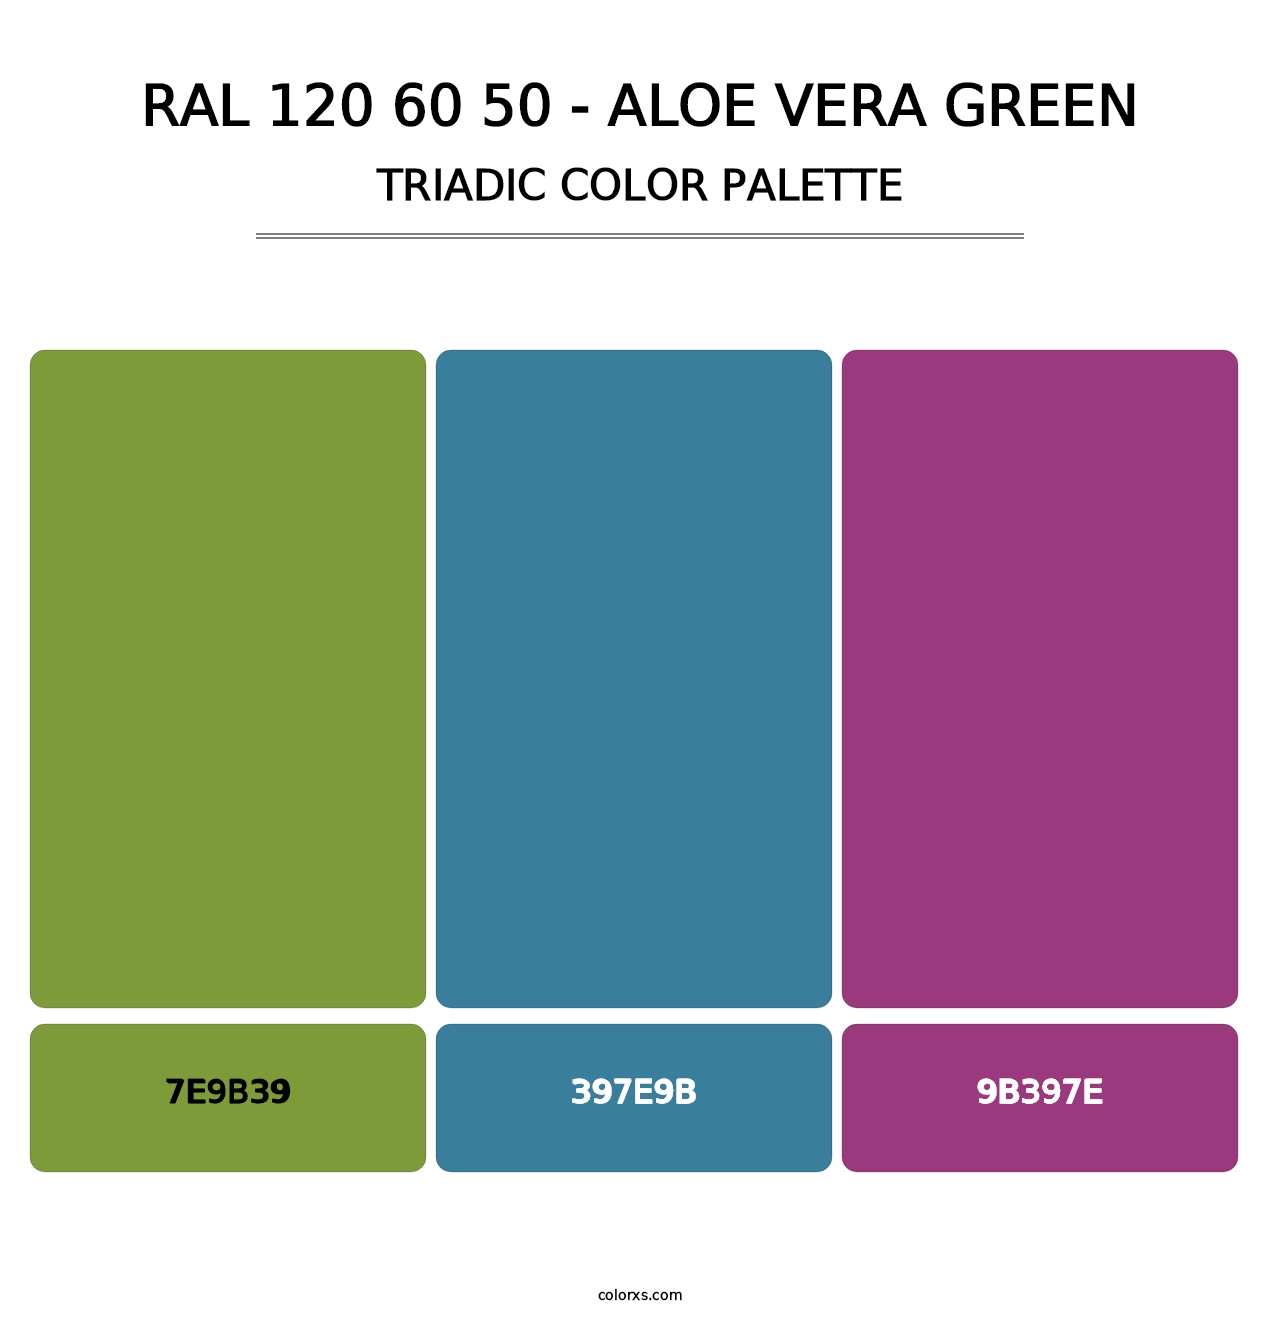 RAL 120 60 50 - Aloe Vera Green - Triadic Color Palette